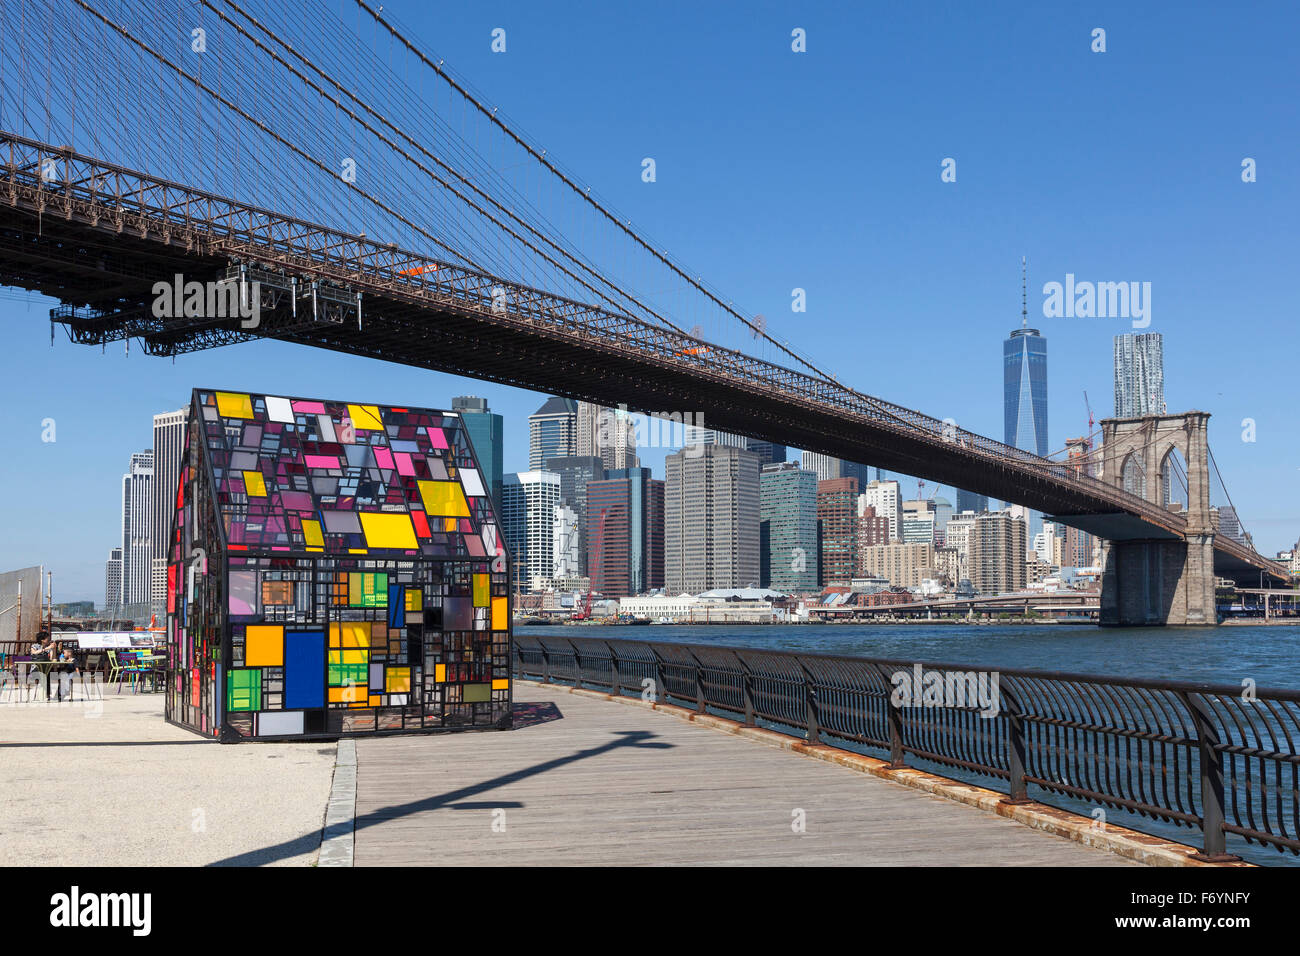 Jeppe Hein installation artistique, pont de Brooklyn, New York City, USA Banque D'Images